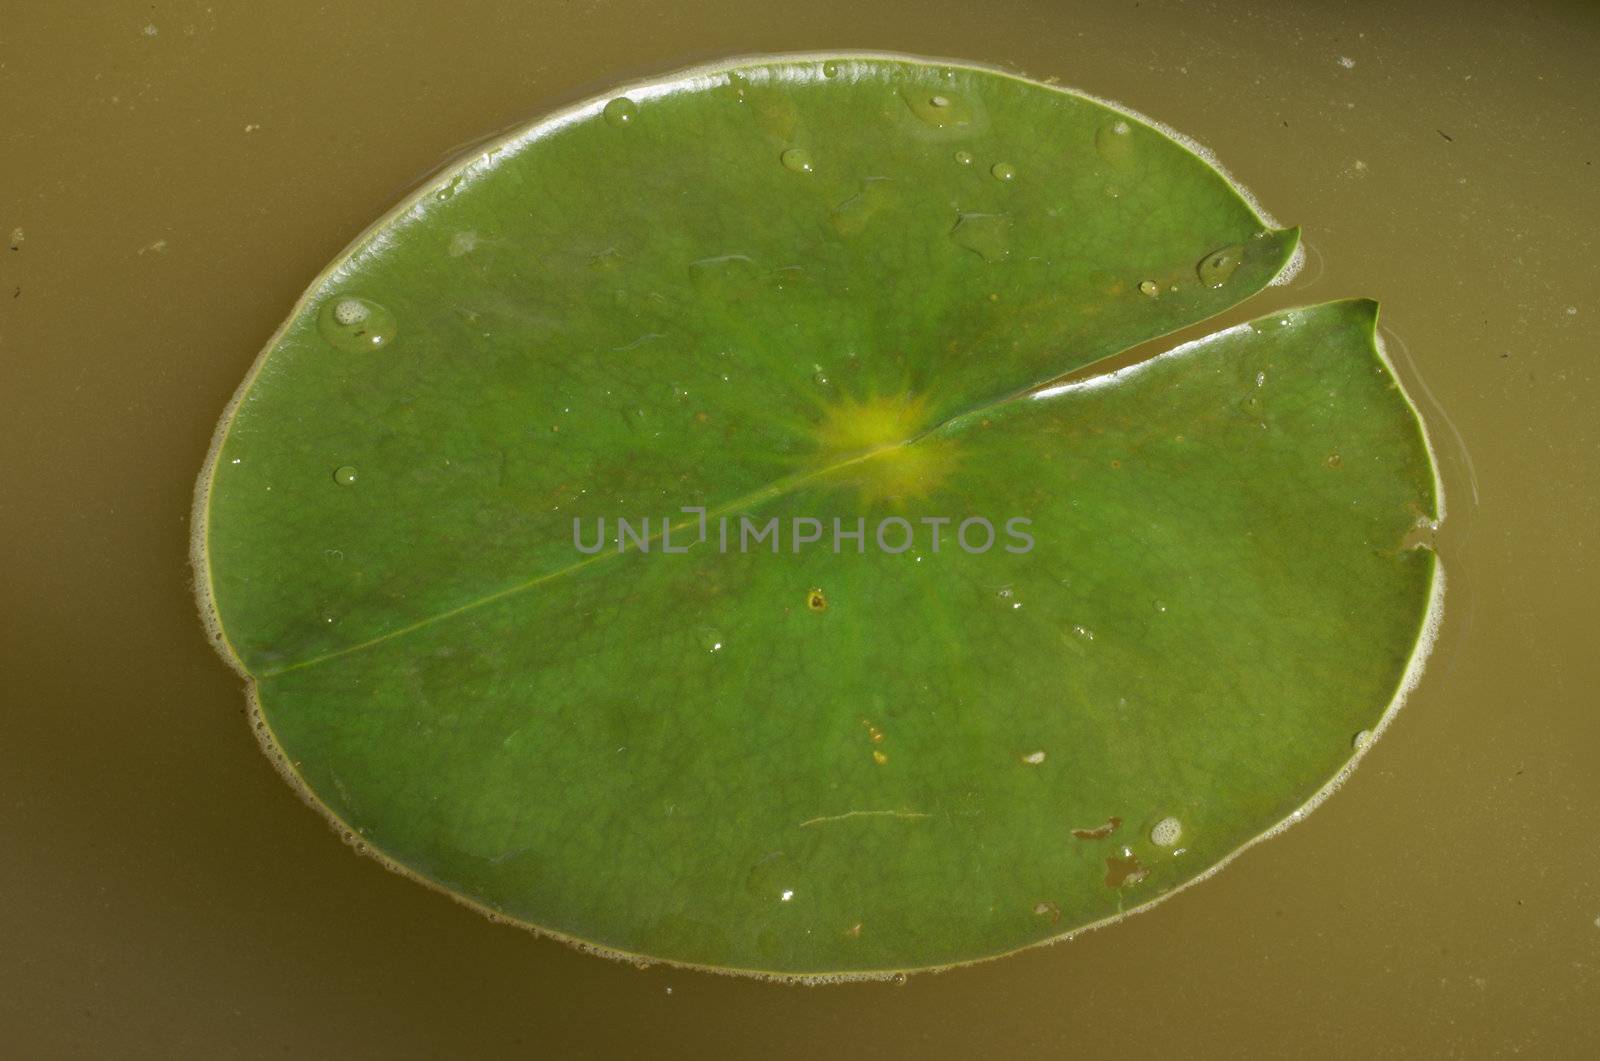 A macro shot of a fresh green lily pad.